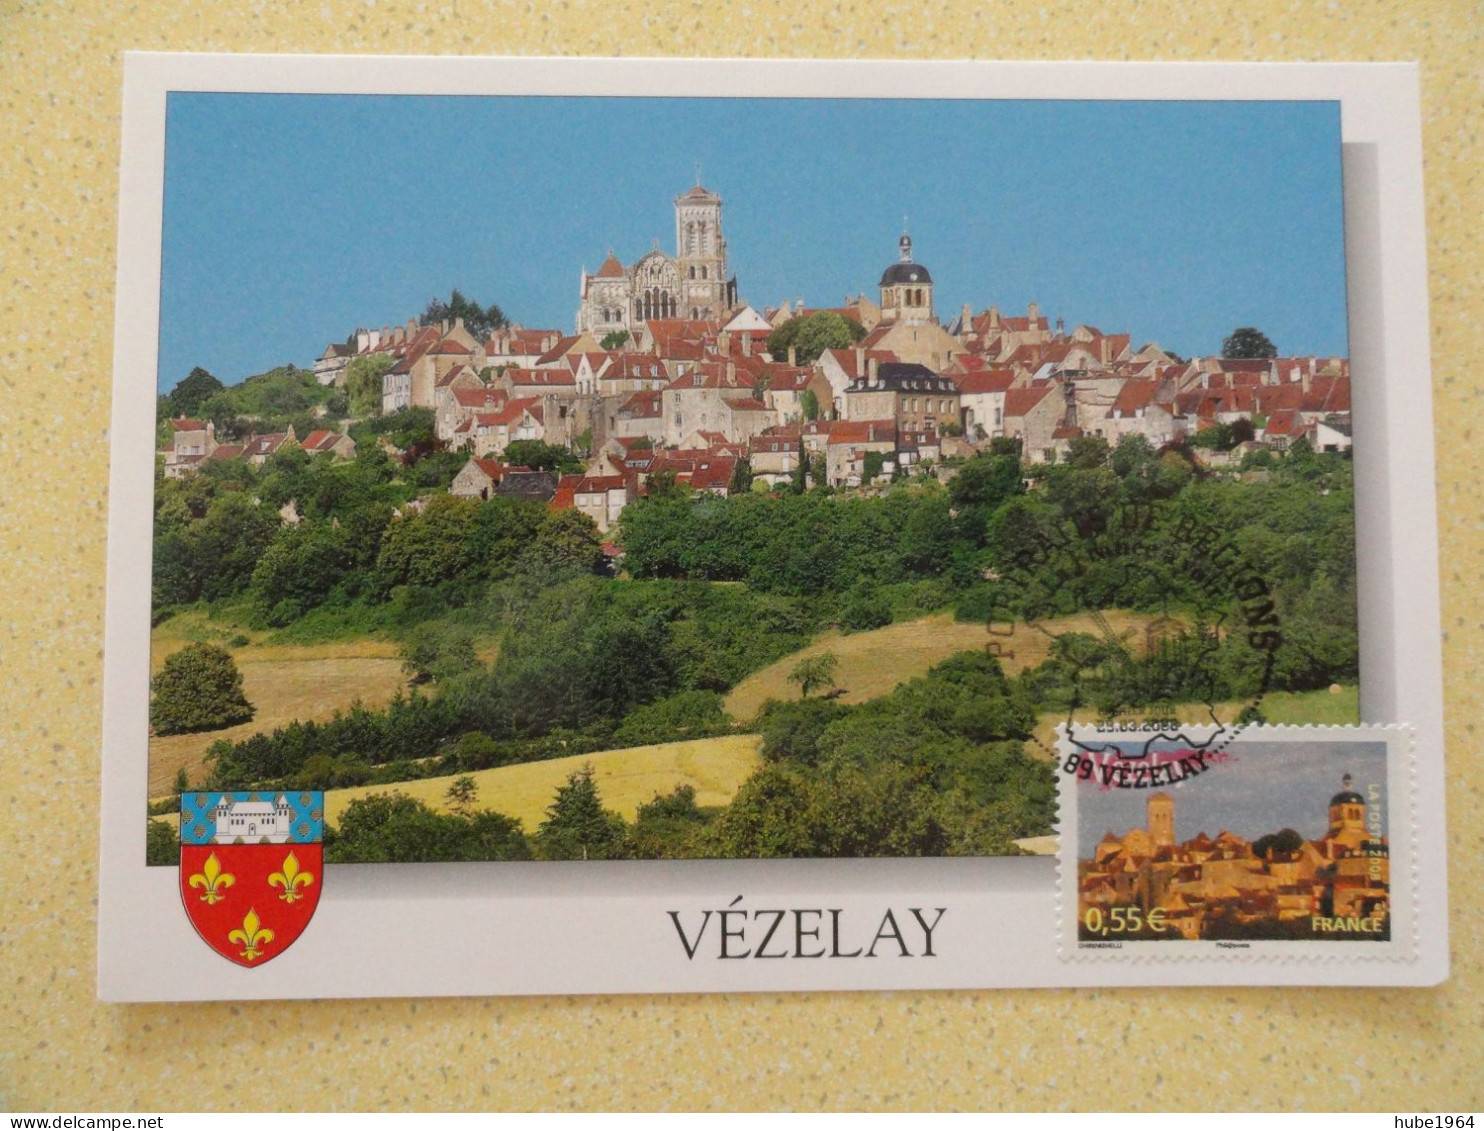 CARTE MAXIMUM CARD VEZELAY OPJ VEZELAY FRANCE - Churches & Cathedrals